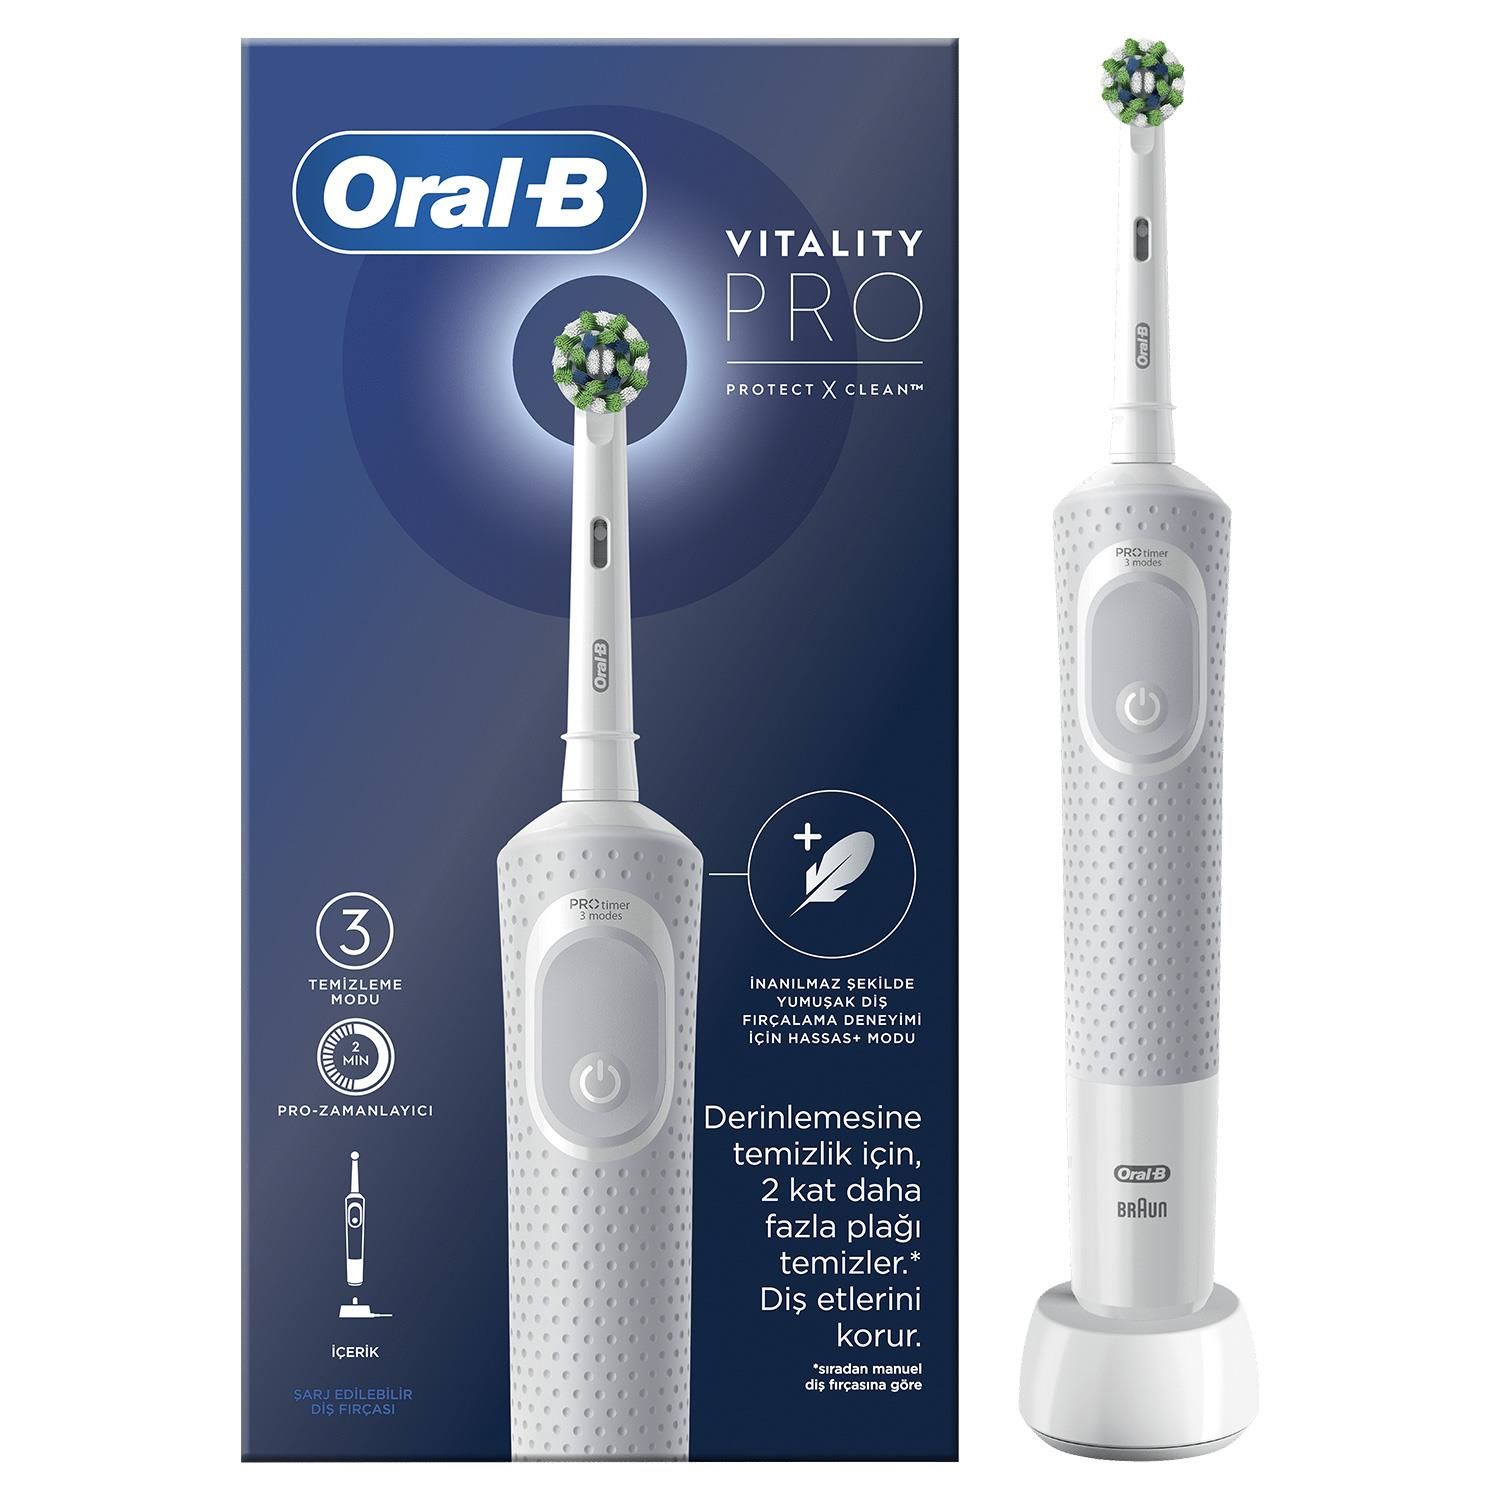 Oral-B D103 Vitality Pro Protect X Clean Şarjlı Beyaz Diş Fırçası